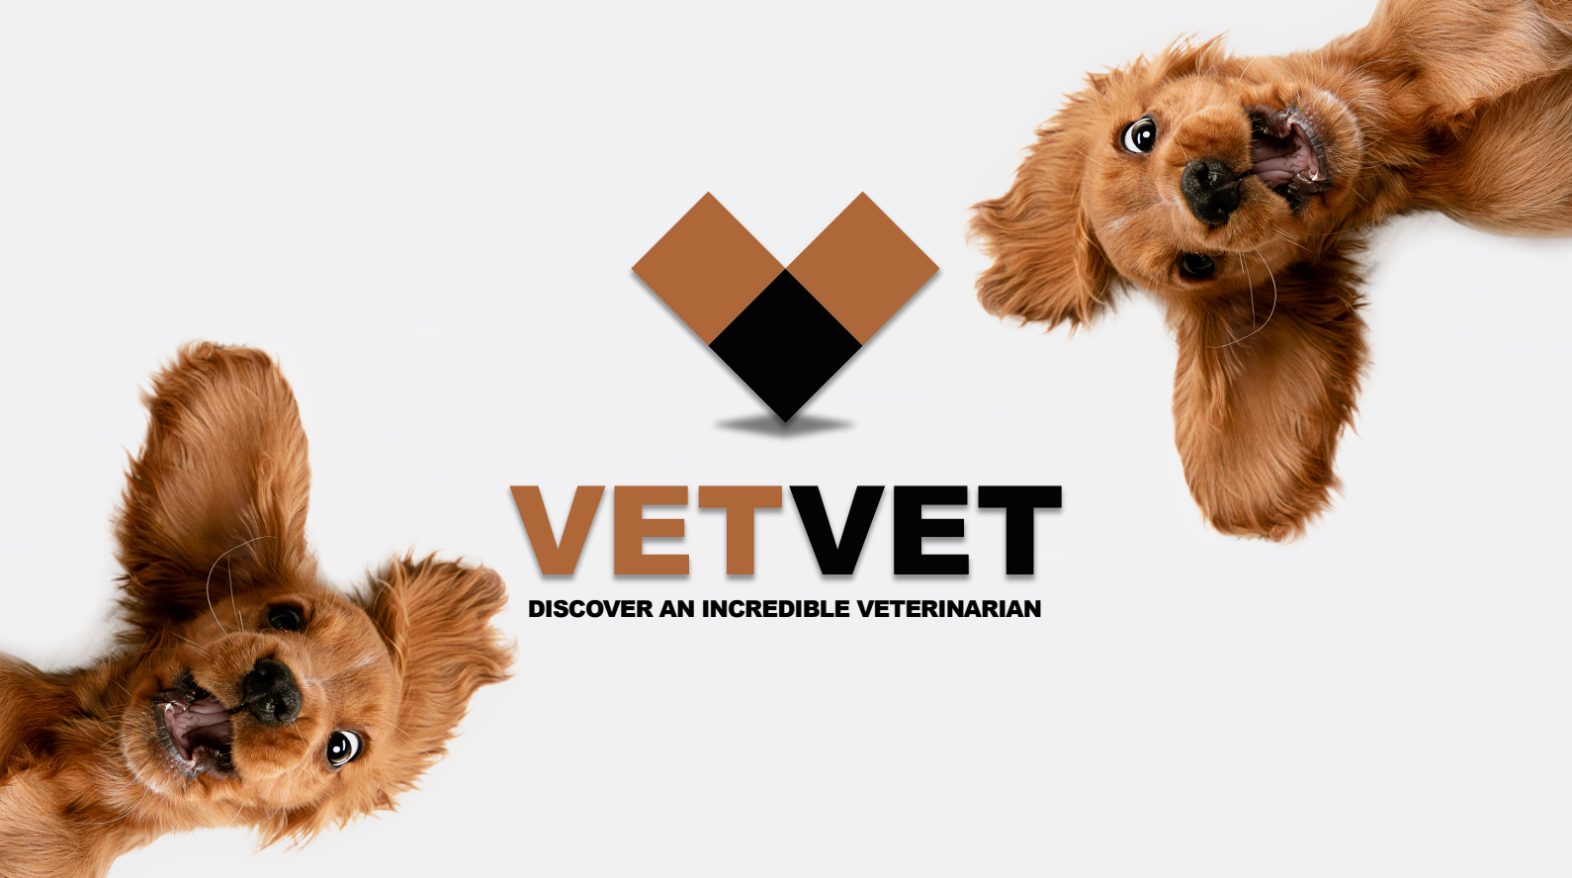 New online platform helps pet owners discover veterinarians